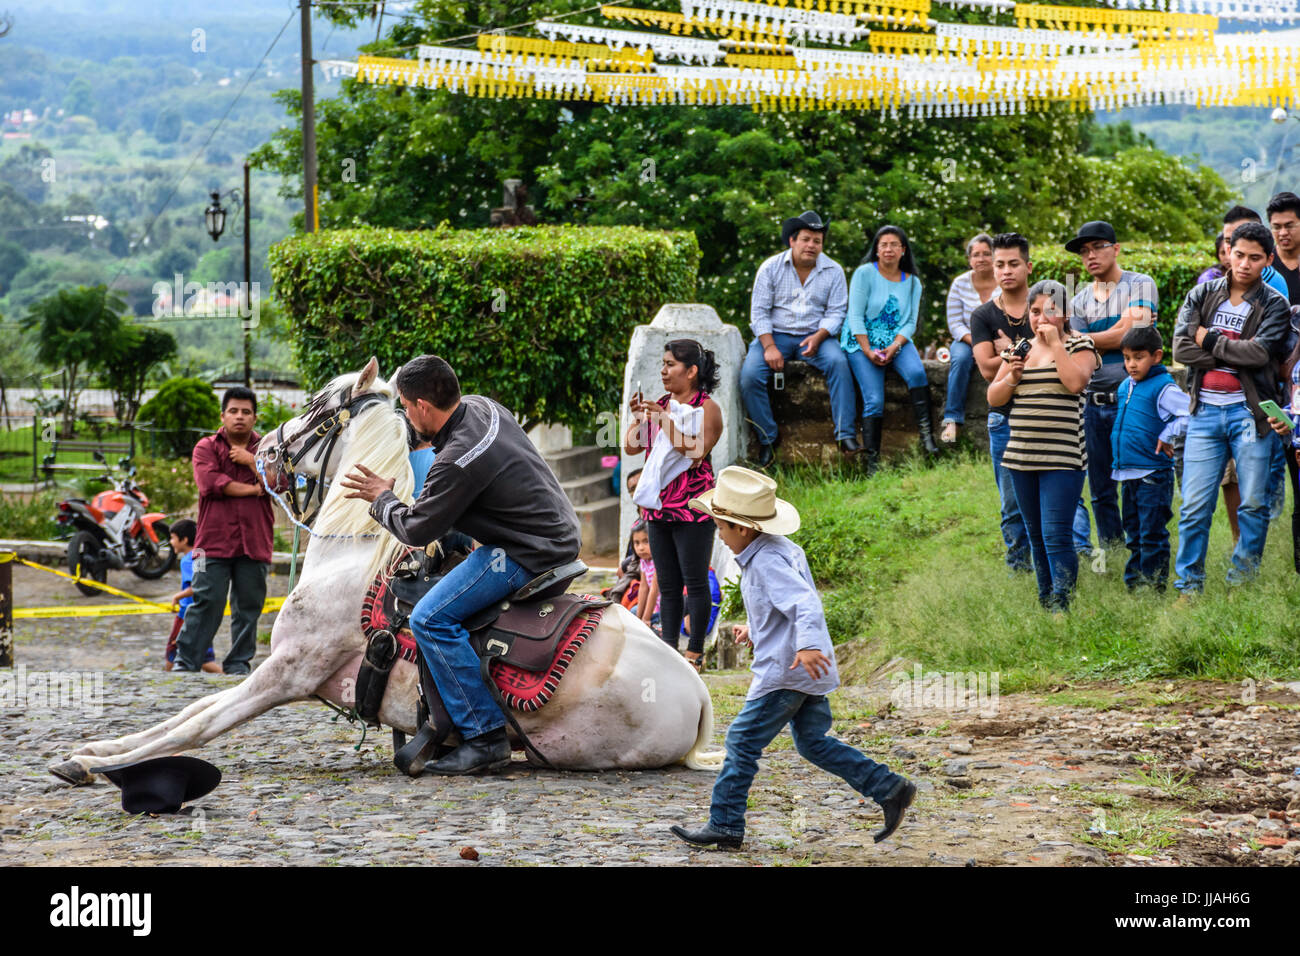 San Juan del Obispo, Guatemala - June 12, 2016: Cowboy makes horse lie down as part of show in horse street parade in village near Antigua, Guatemala Stock Photo